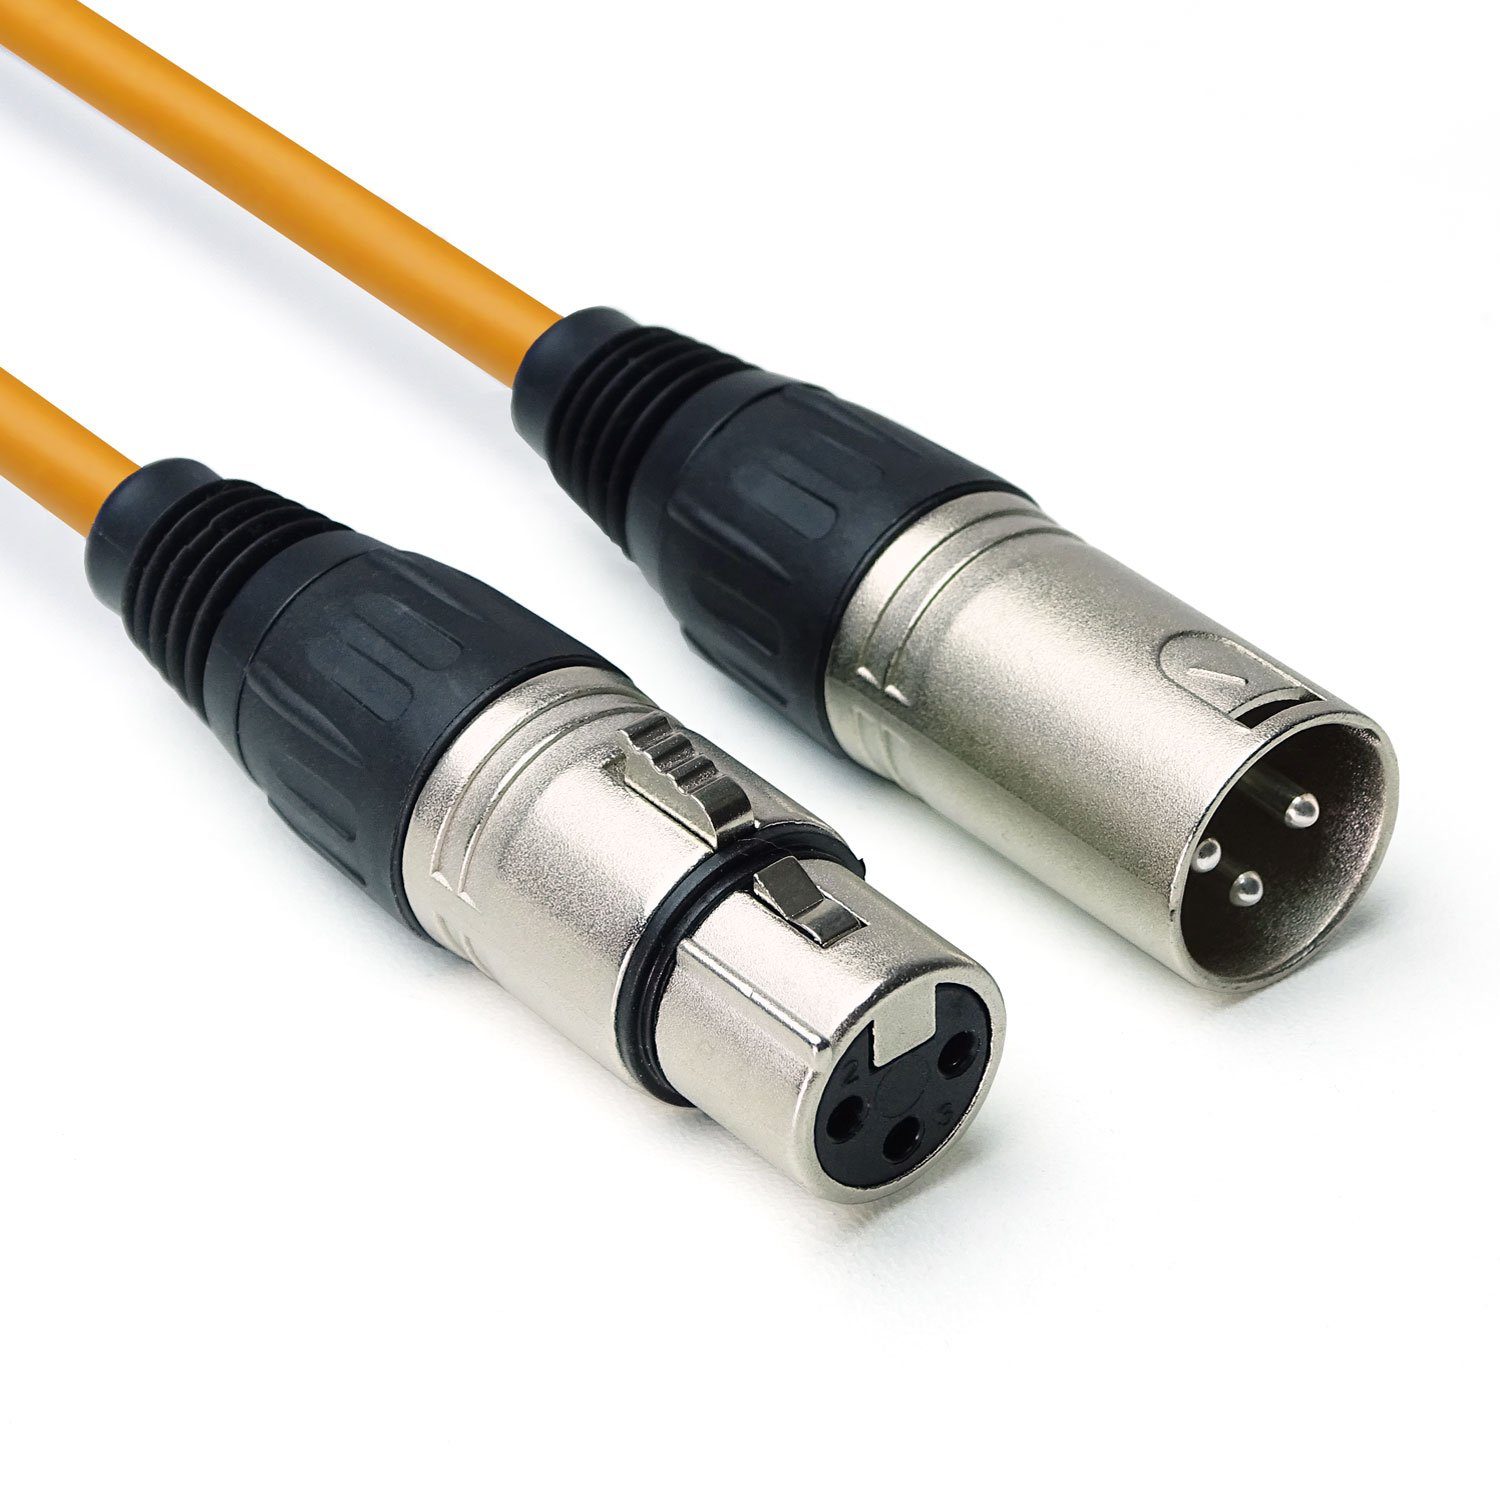 keepdrum Mikrofonkabel XLR 3-polig 10m Orange Audio-Kabel, XLR 3-polig